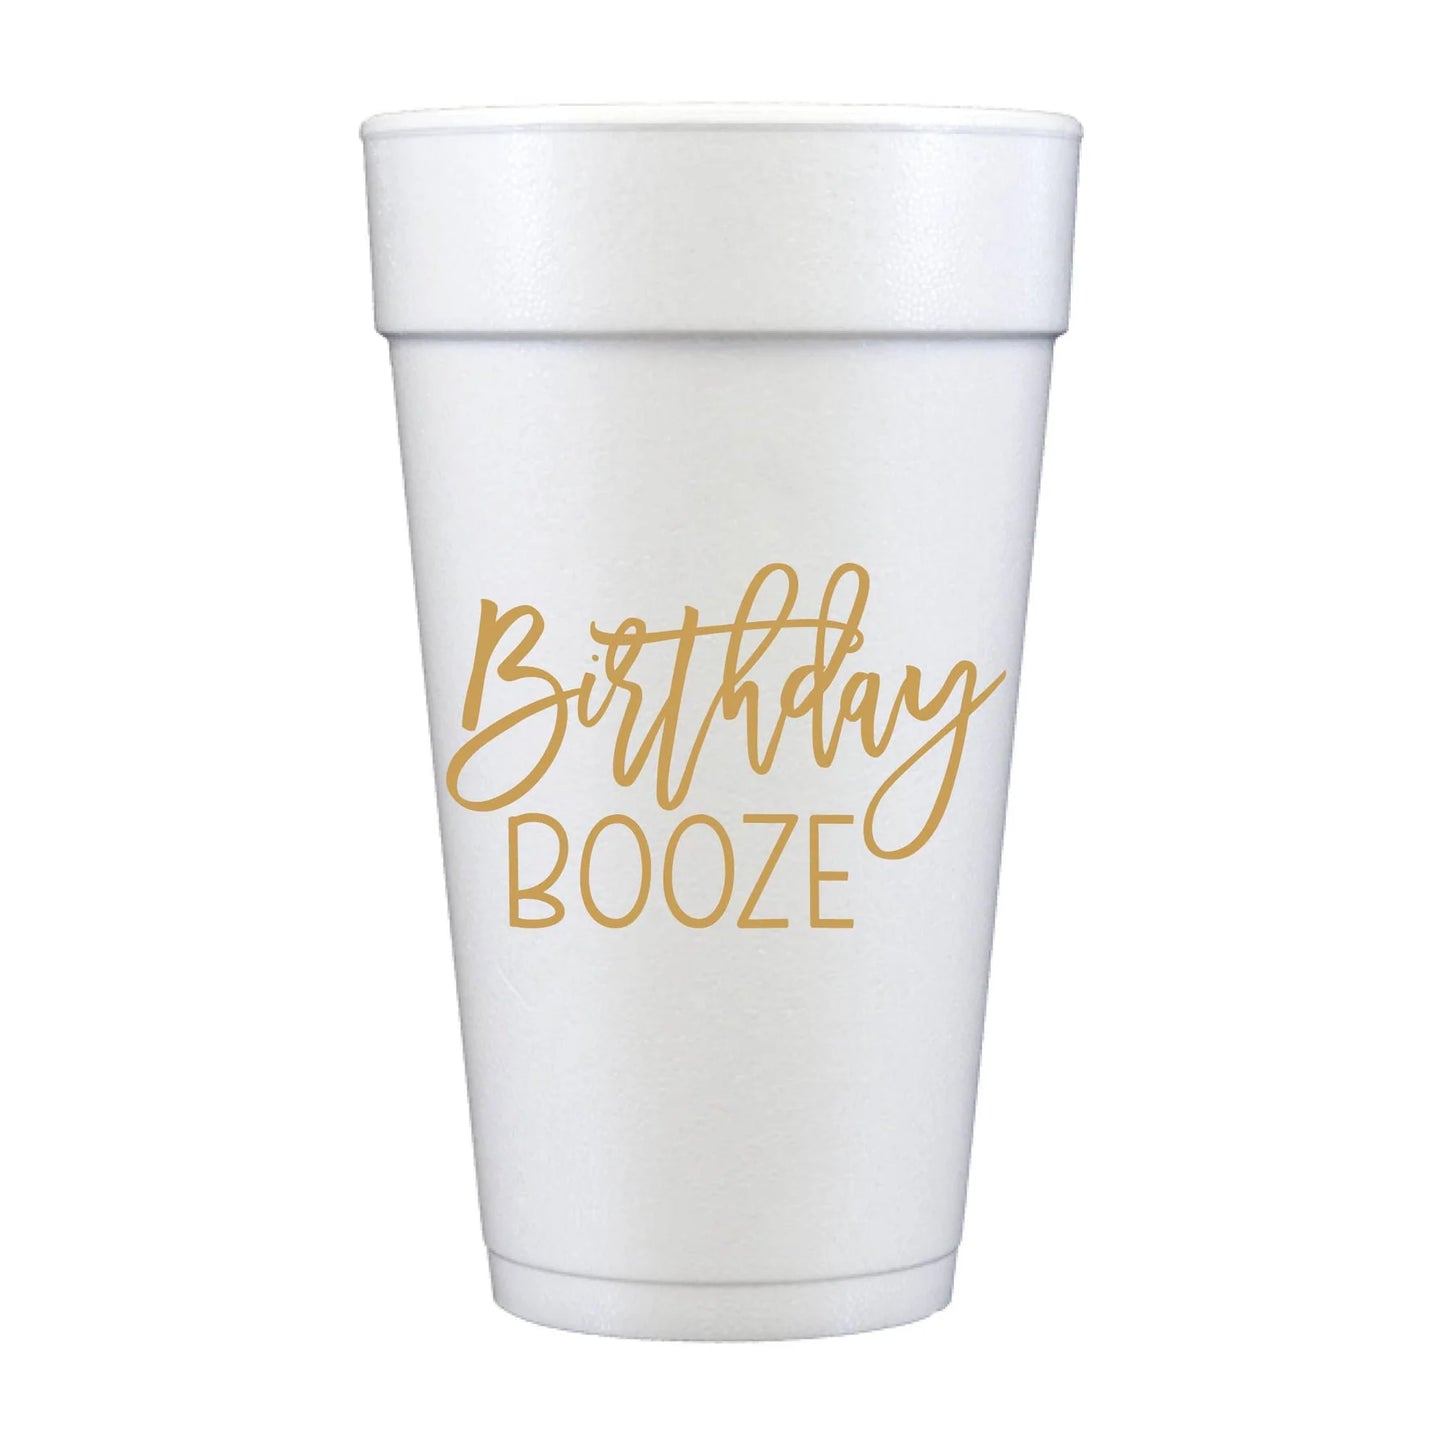 Birthday Booze Foam Cup Sleeve